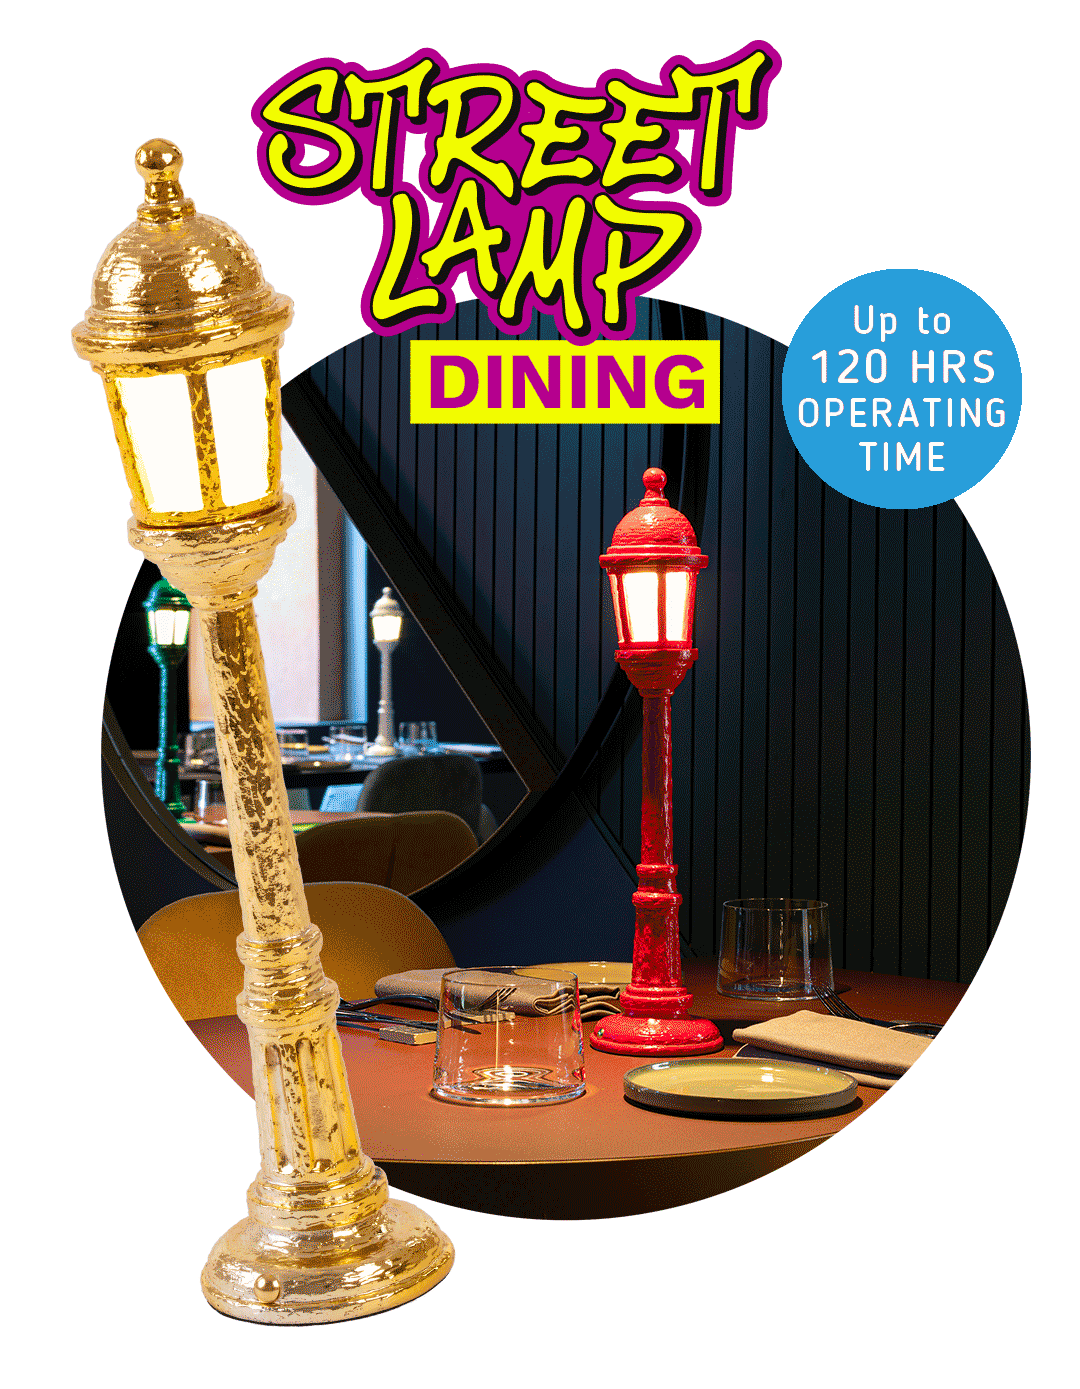 streetlamp_dining_2_1